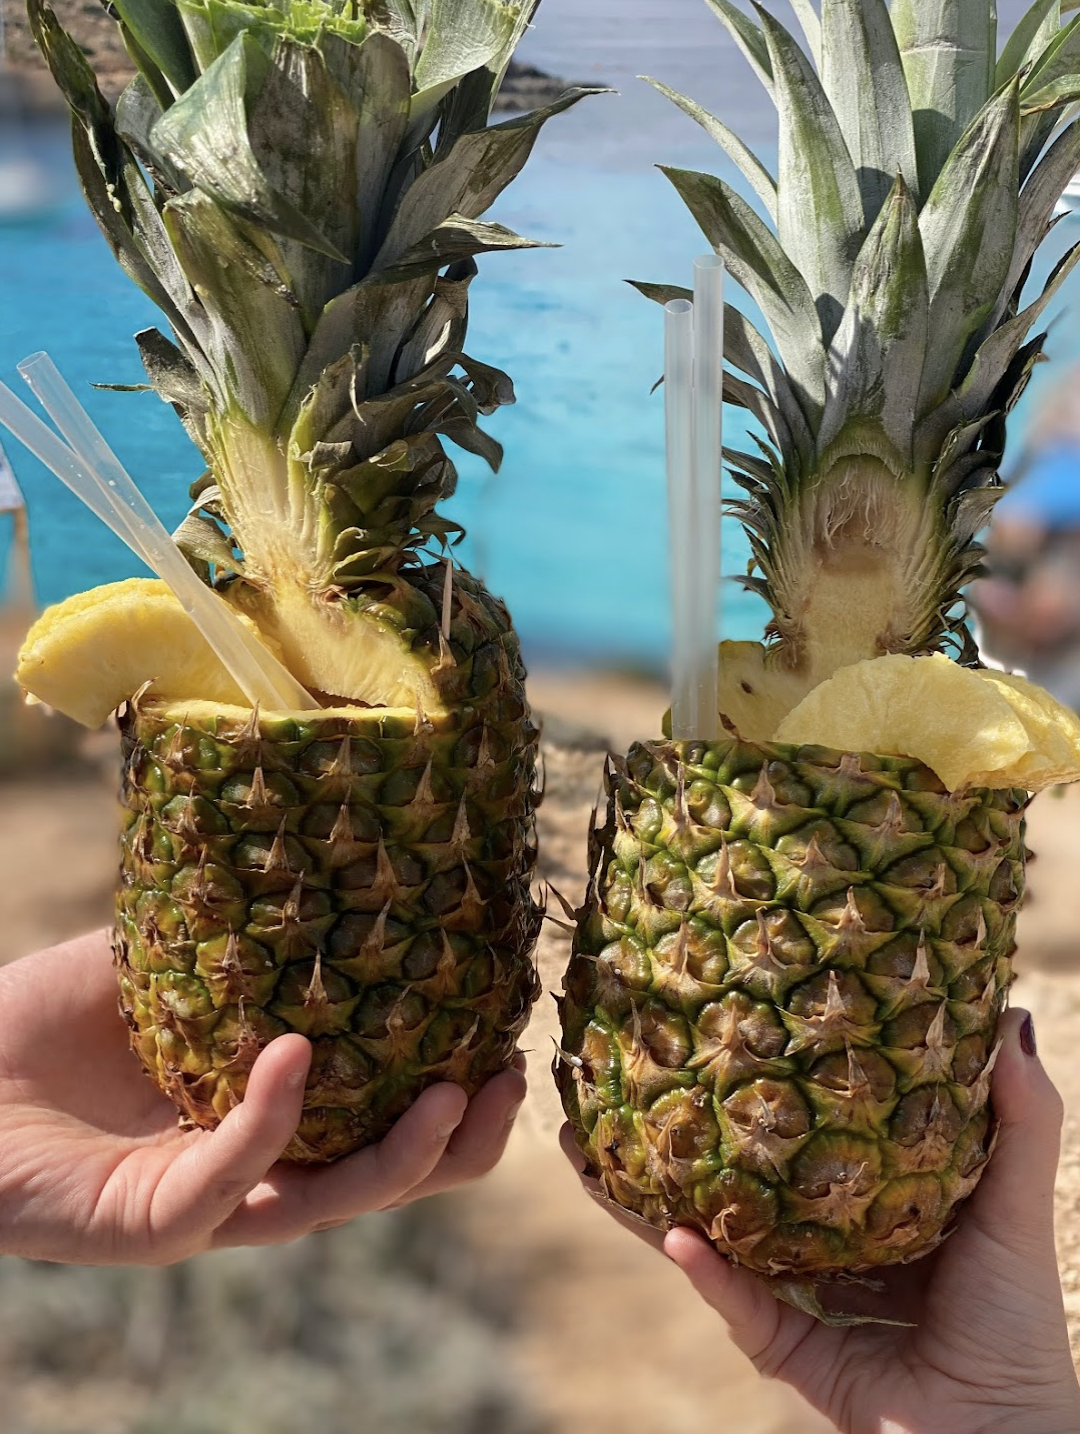 Pineapple cocktails at Blue Lagoon, Comino, Malta